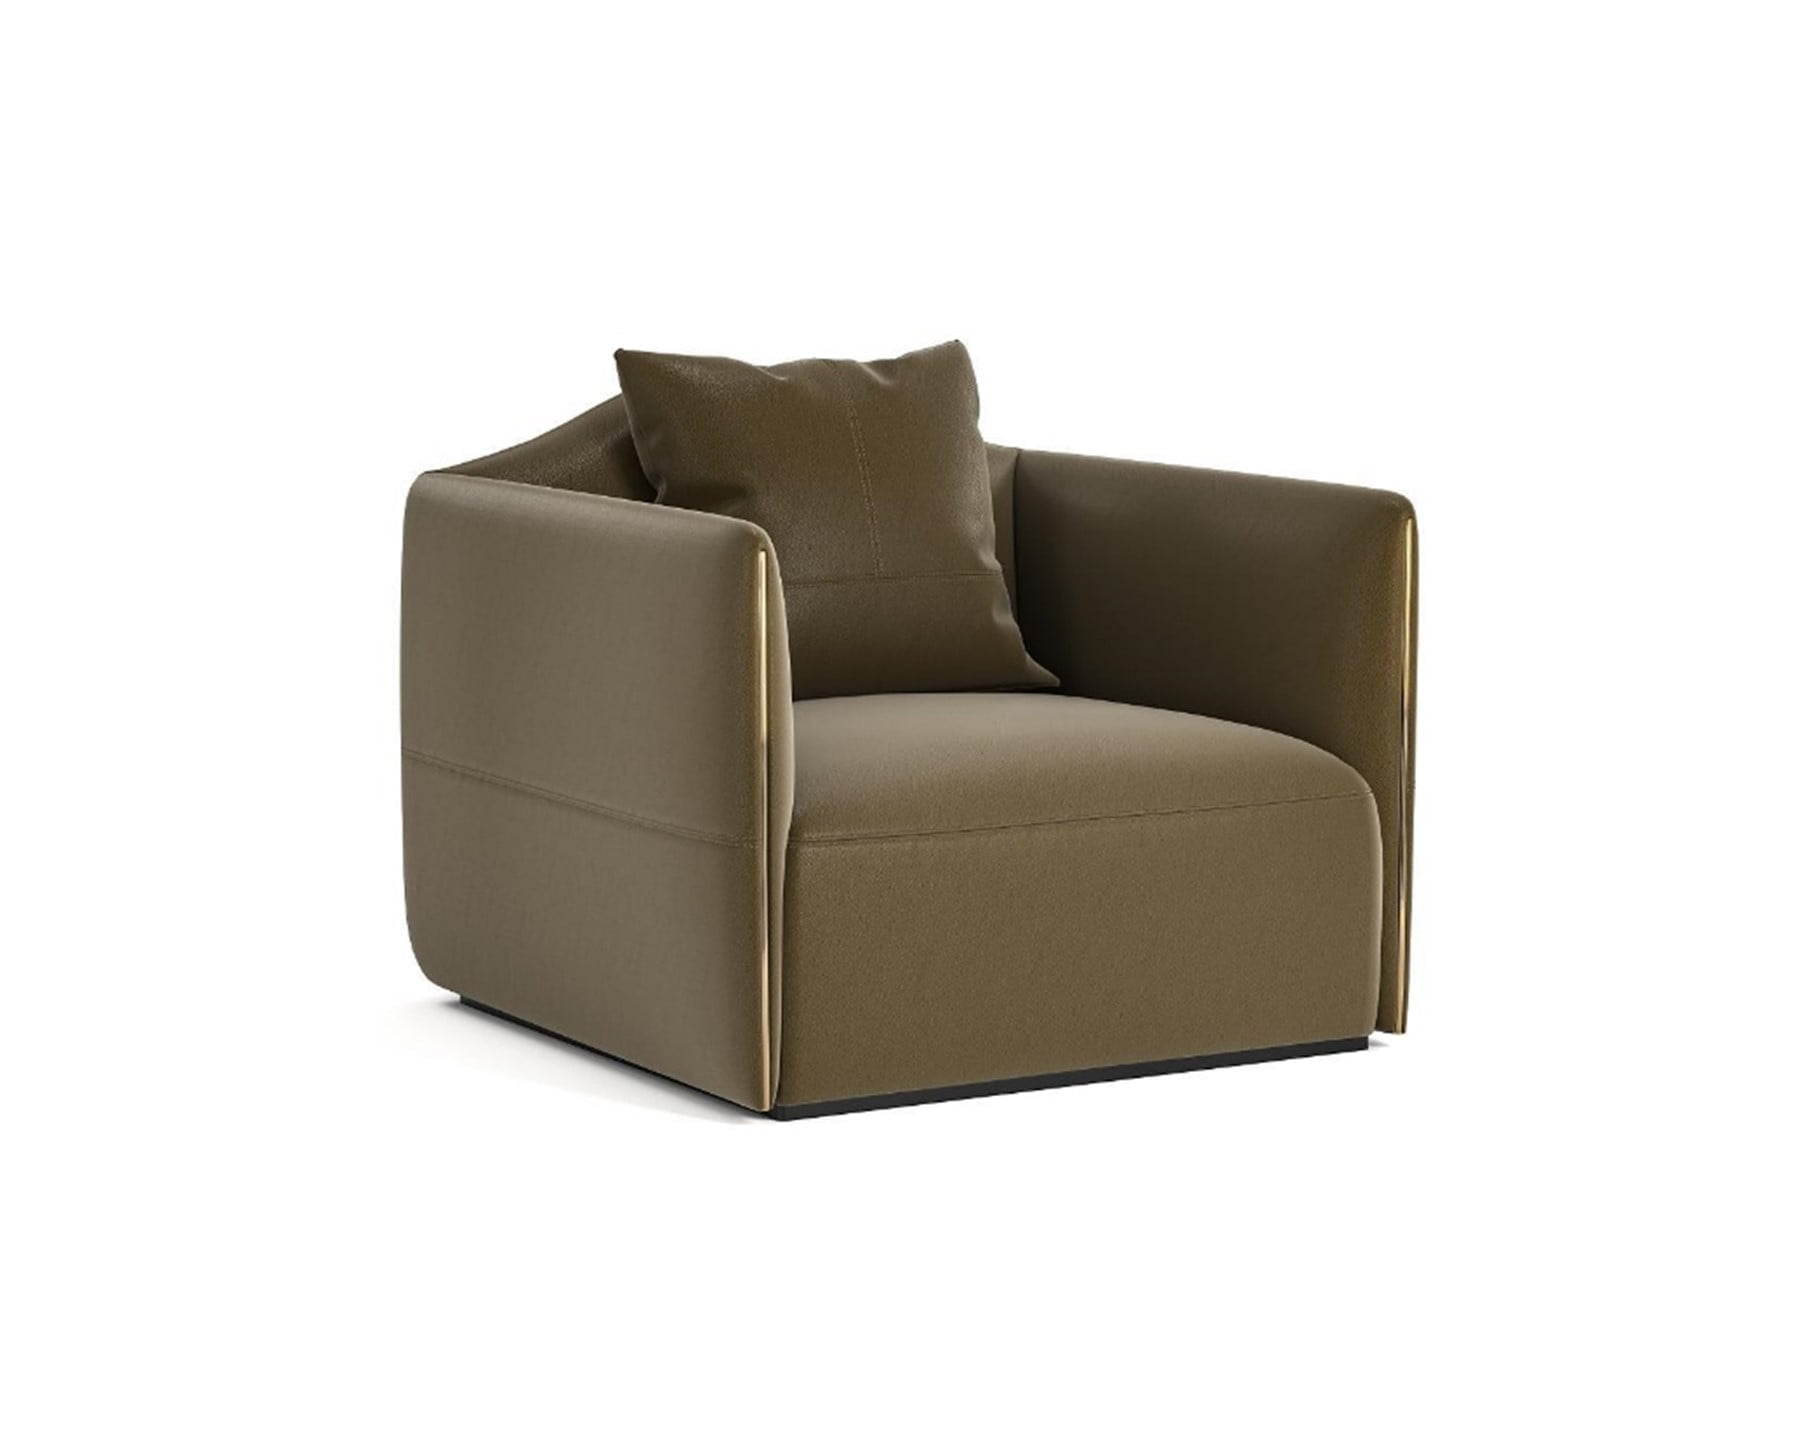 Green Army single seats minimalis sofa